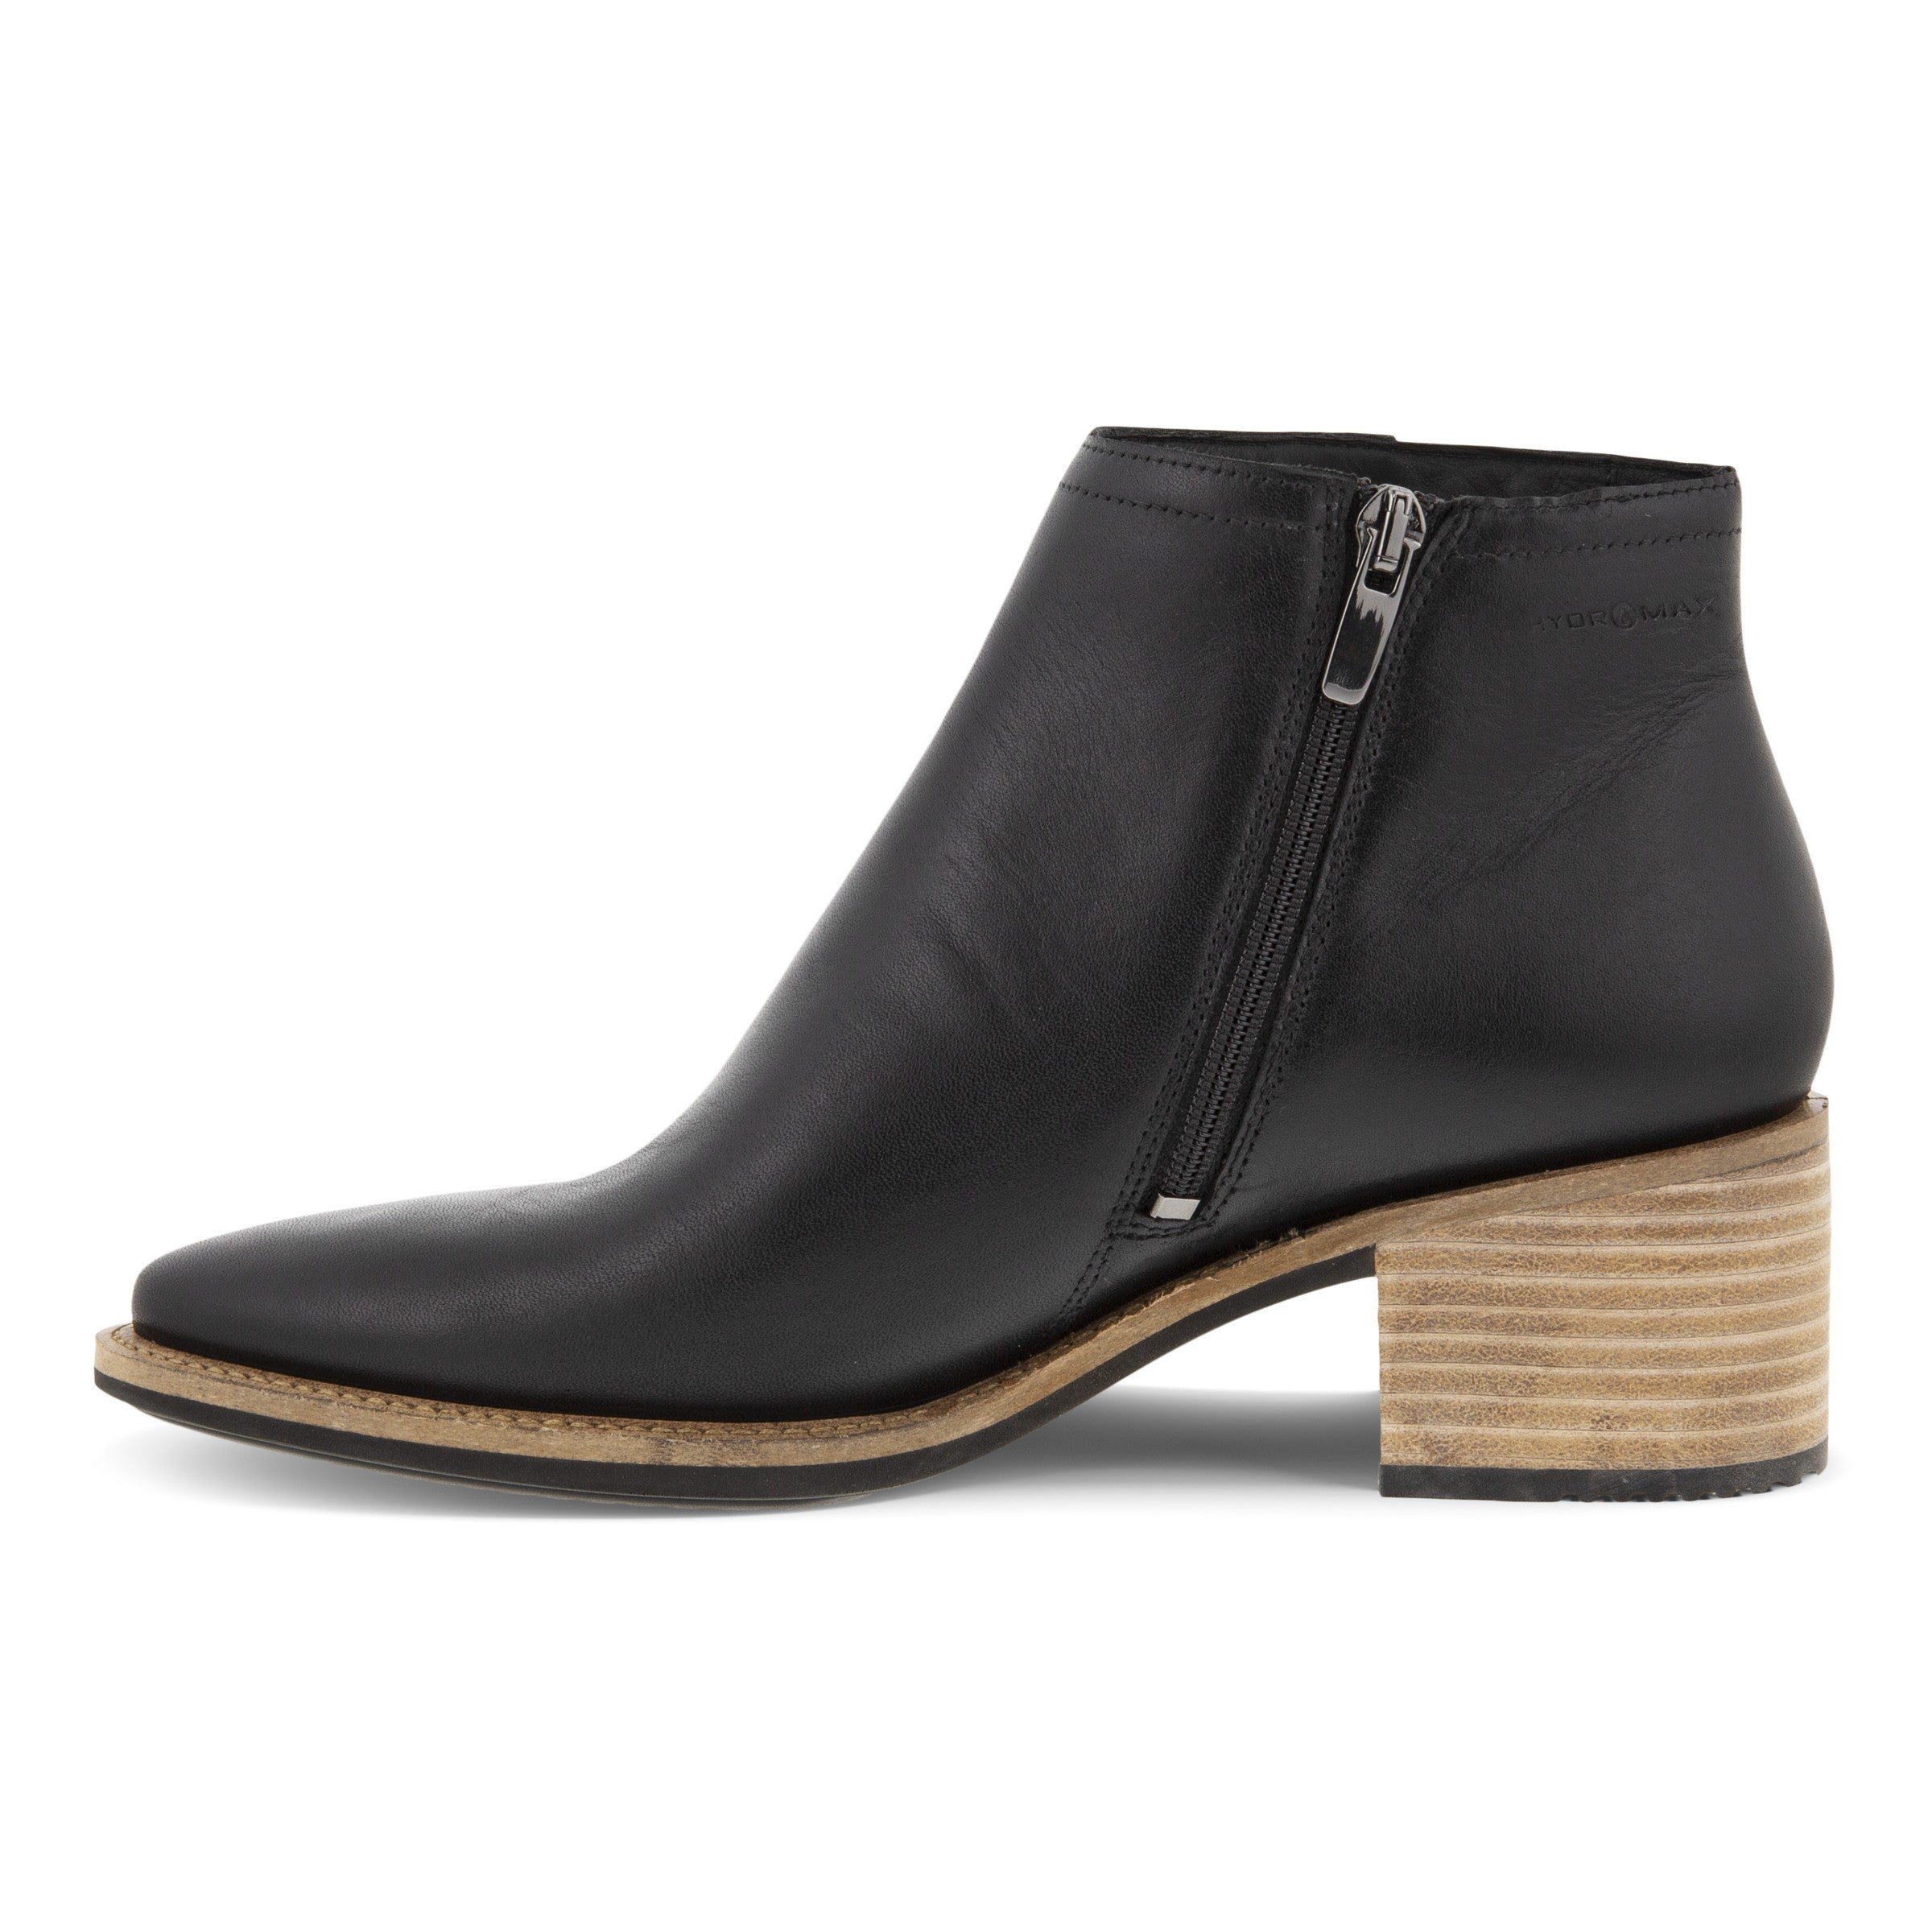 Shape 35 212313 W - shoe&amp;me - Ecco - Boot - Boots, Winter, Womens